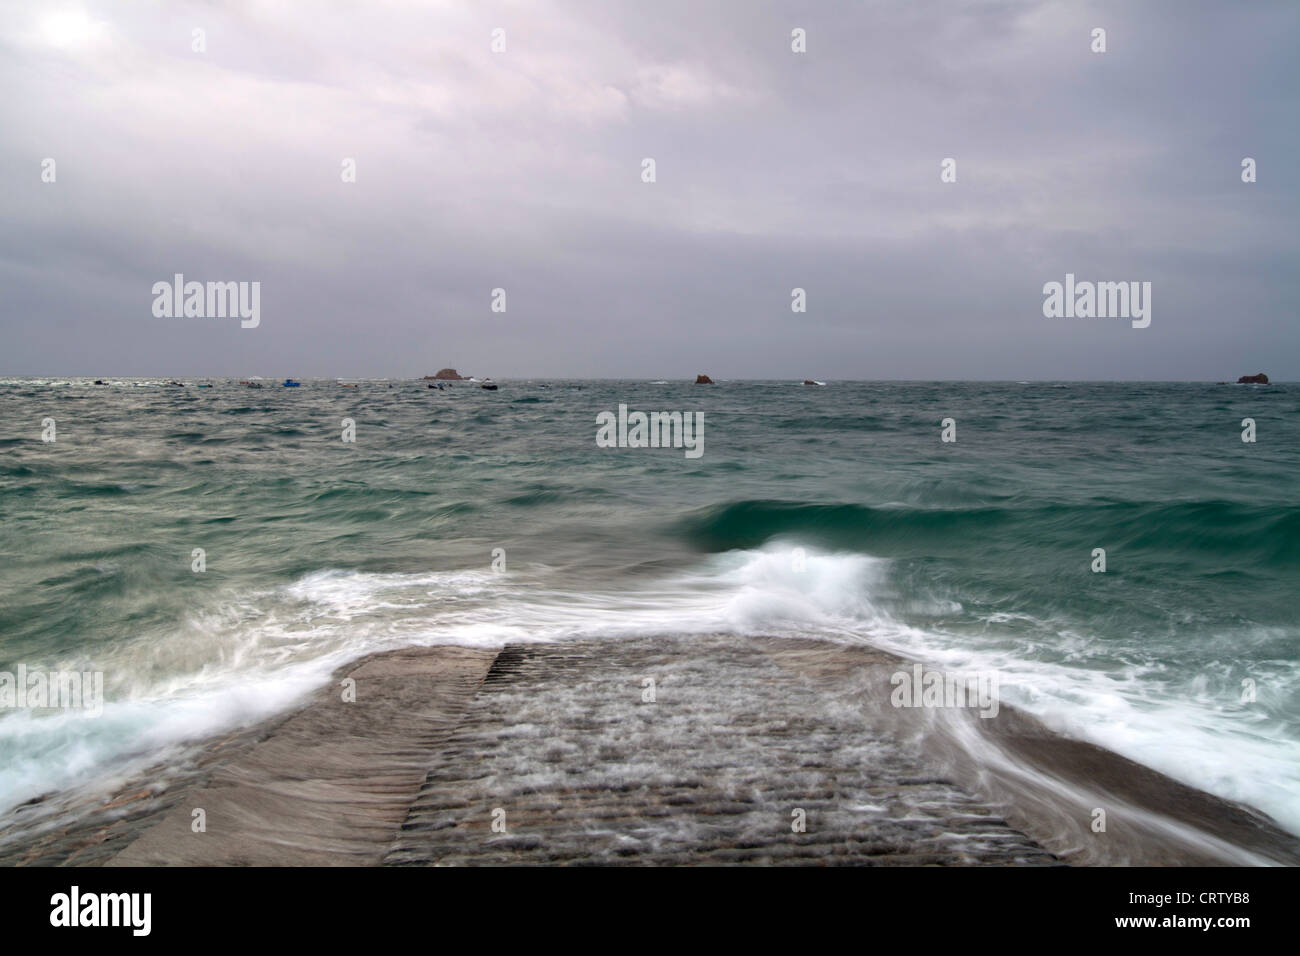 Cobo slip Guernsey, Waves crashing on slipway Stock Photo